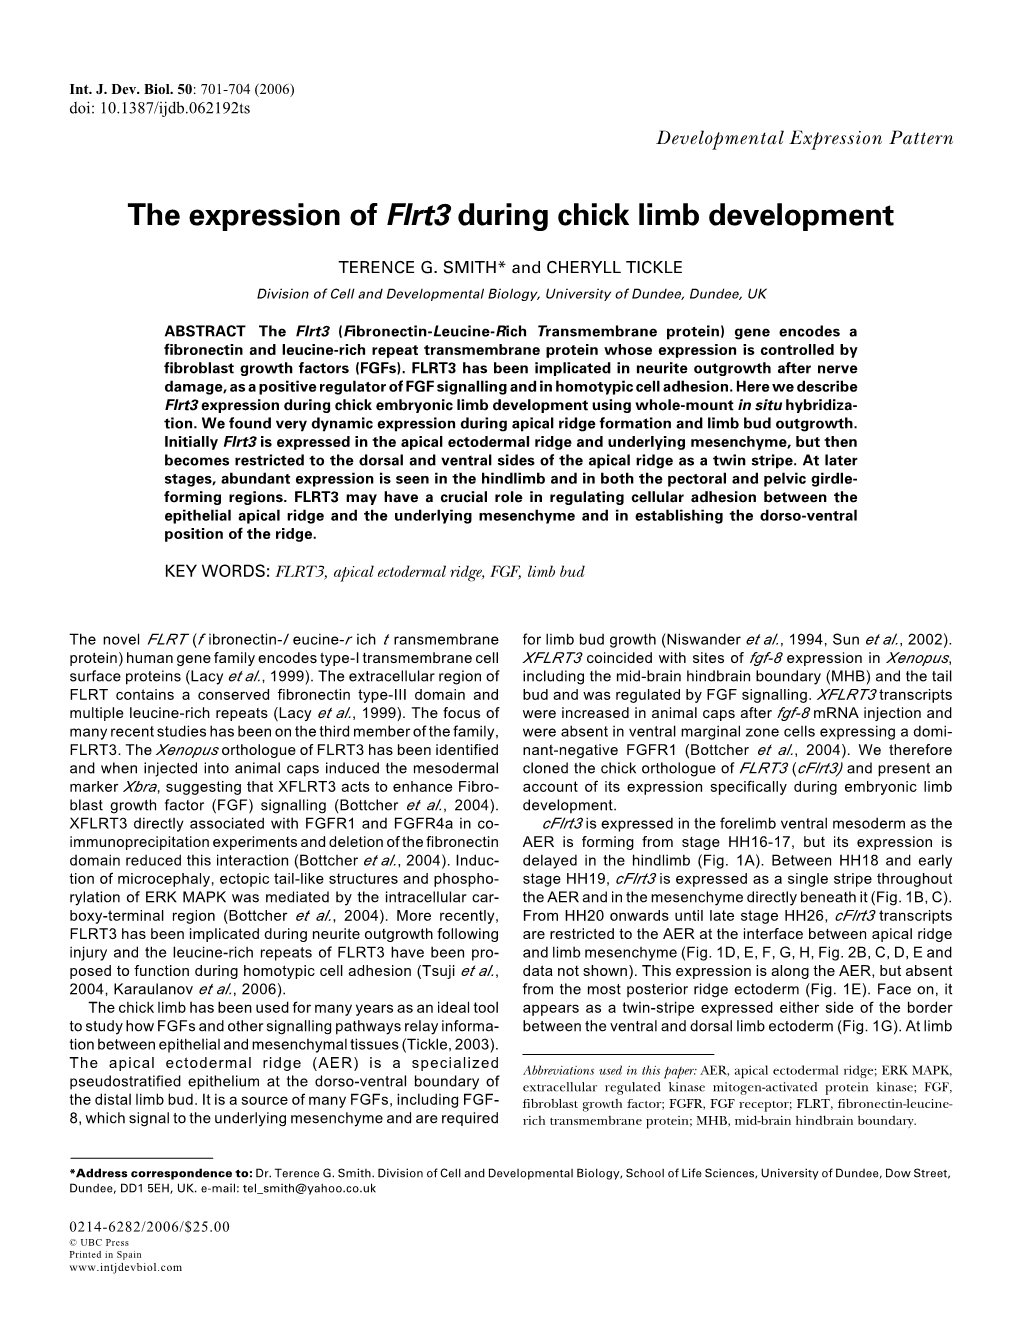 The Expression of Flrt3 During Chick Limb Development